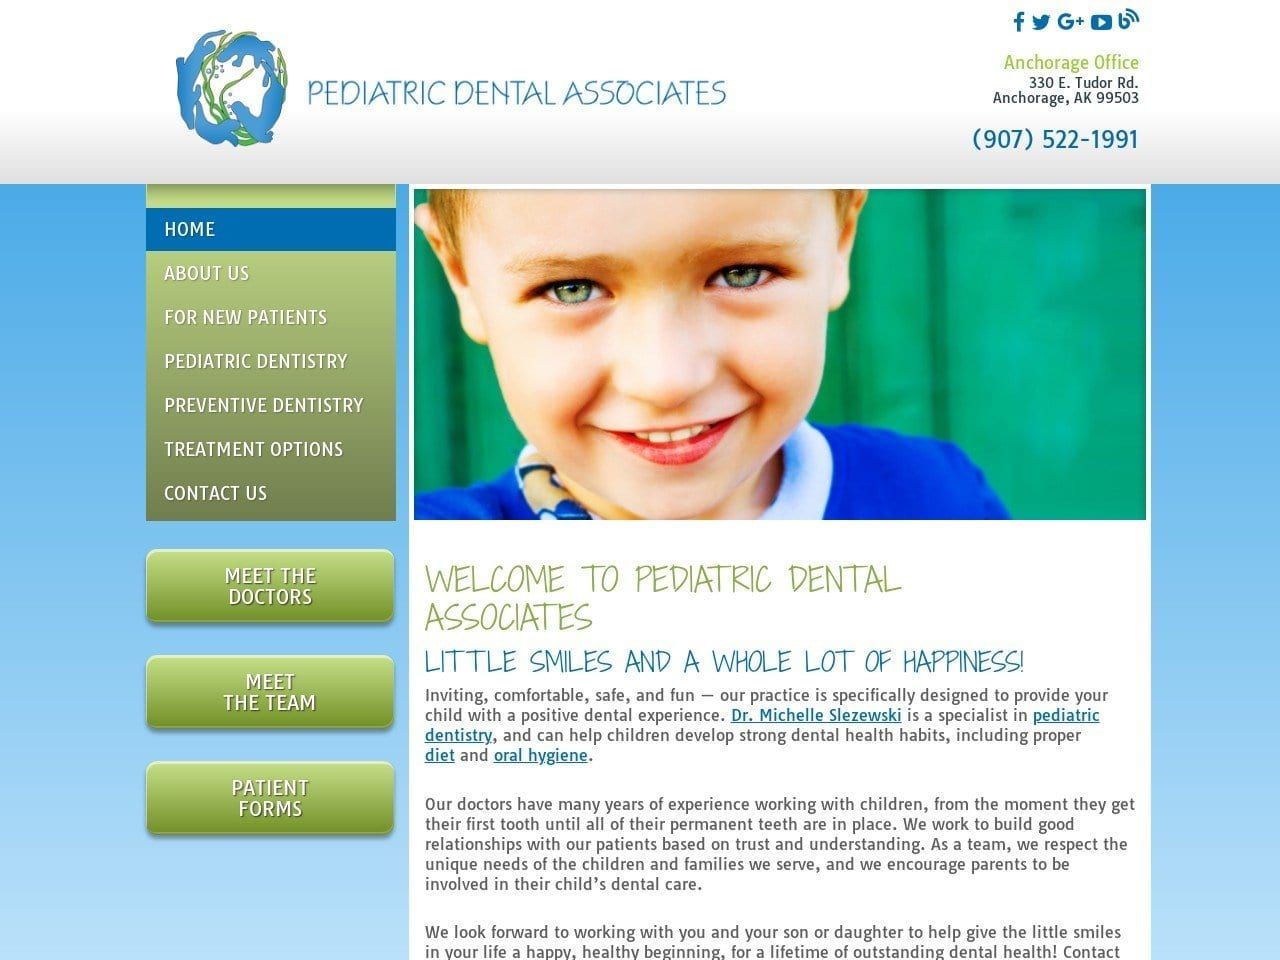 Pediatric Dental Associates Website Screenshot from akpediatricdental.com